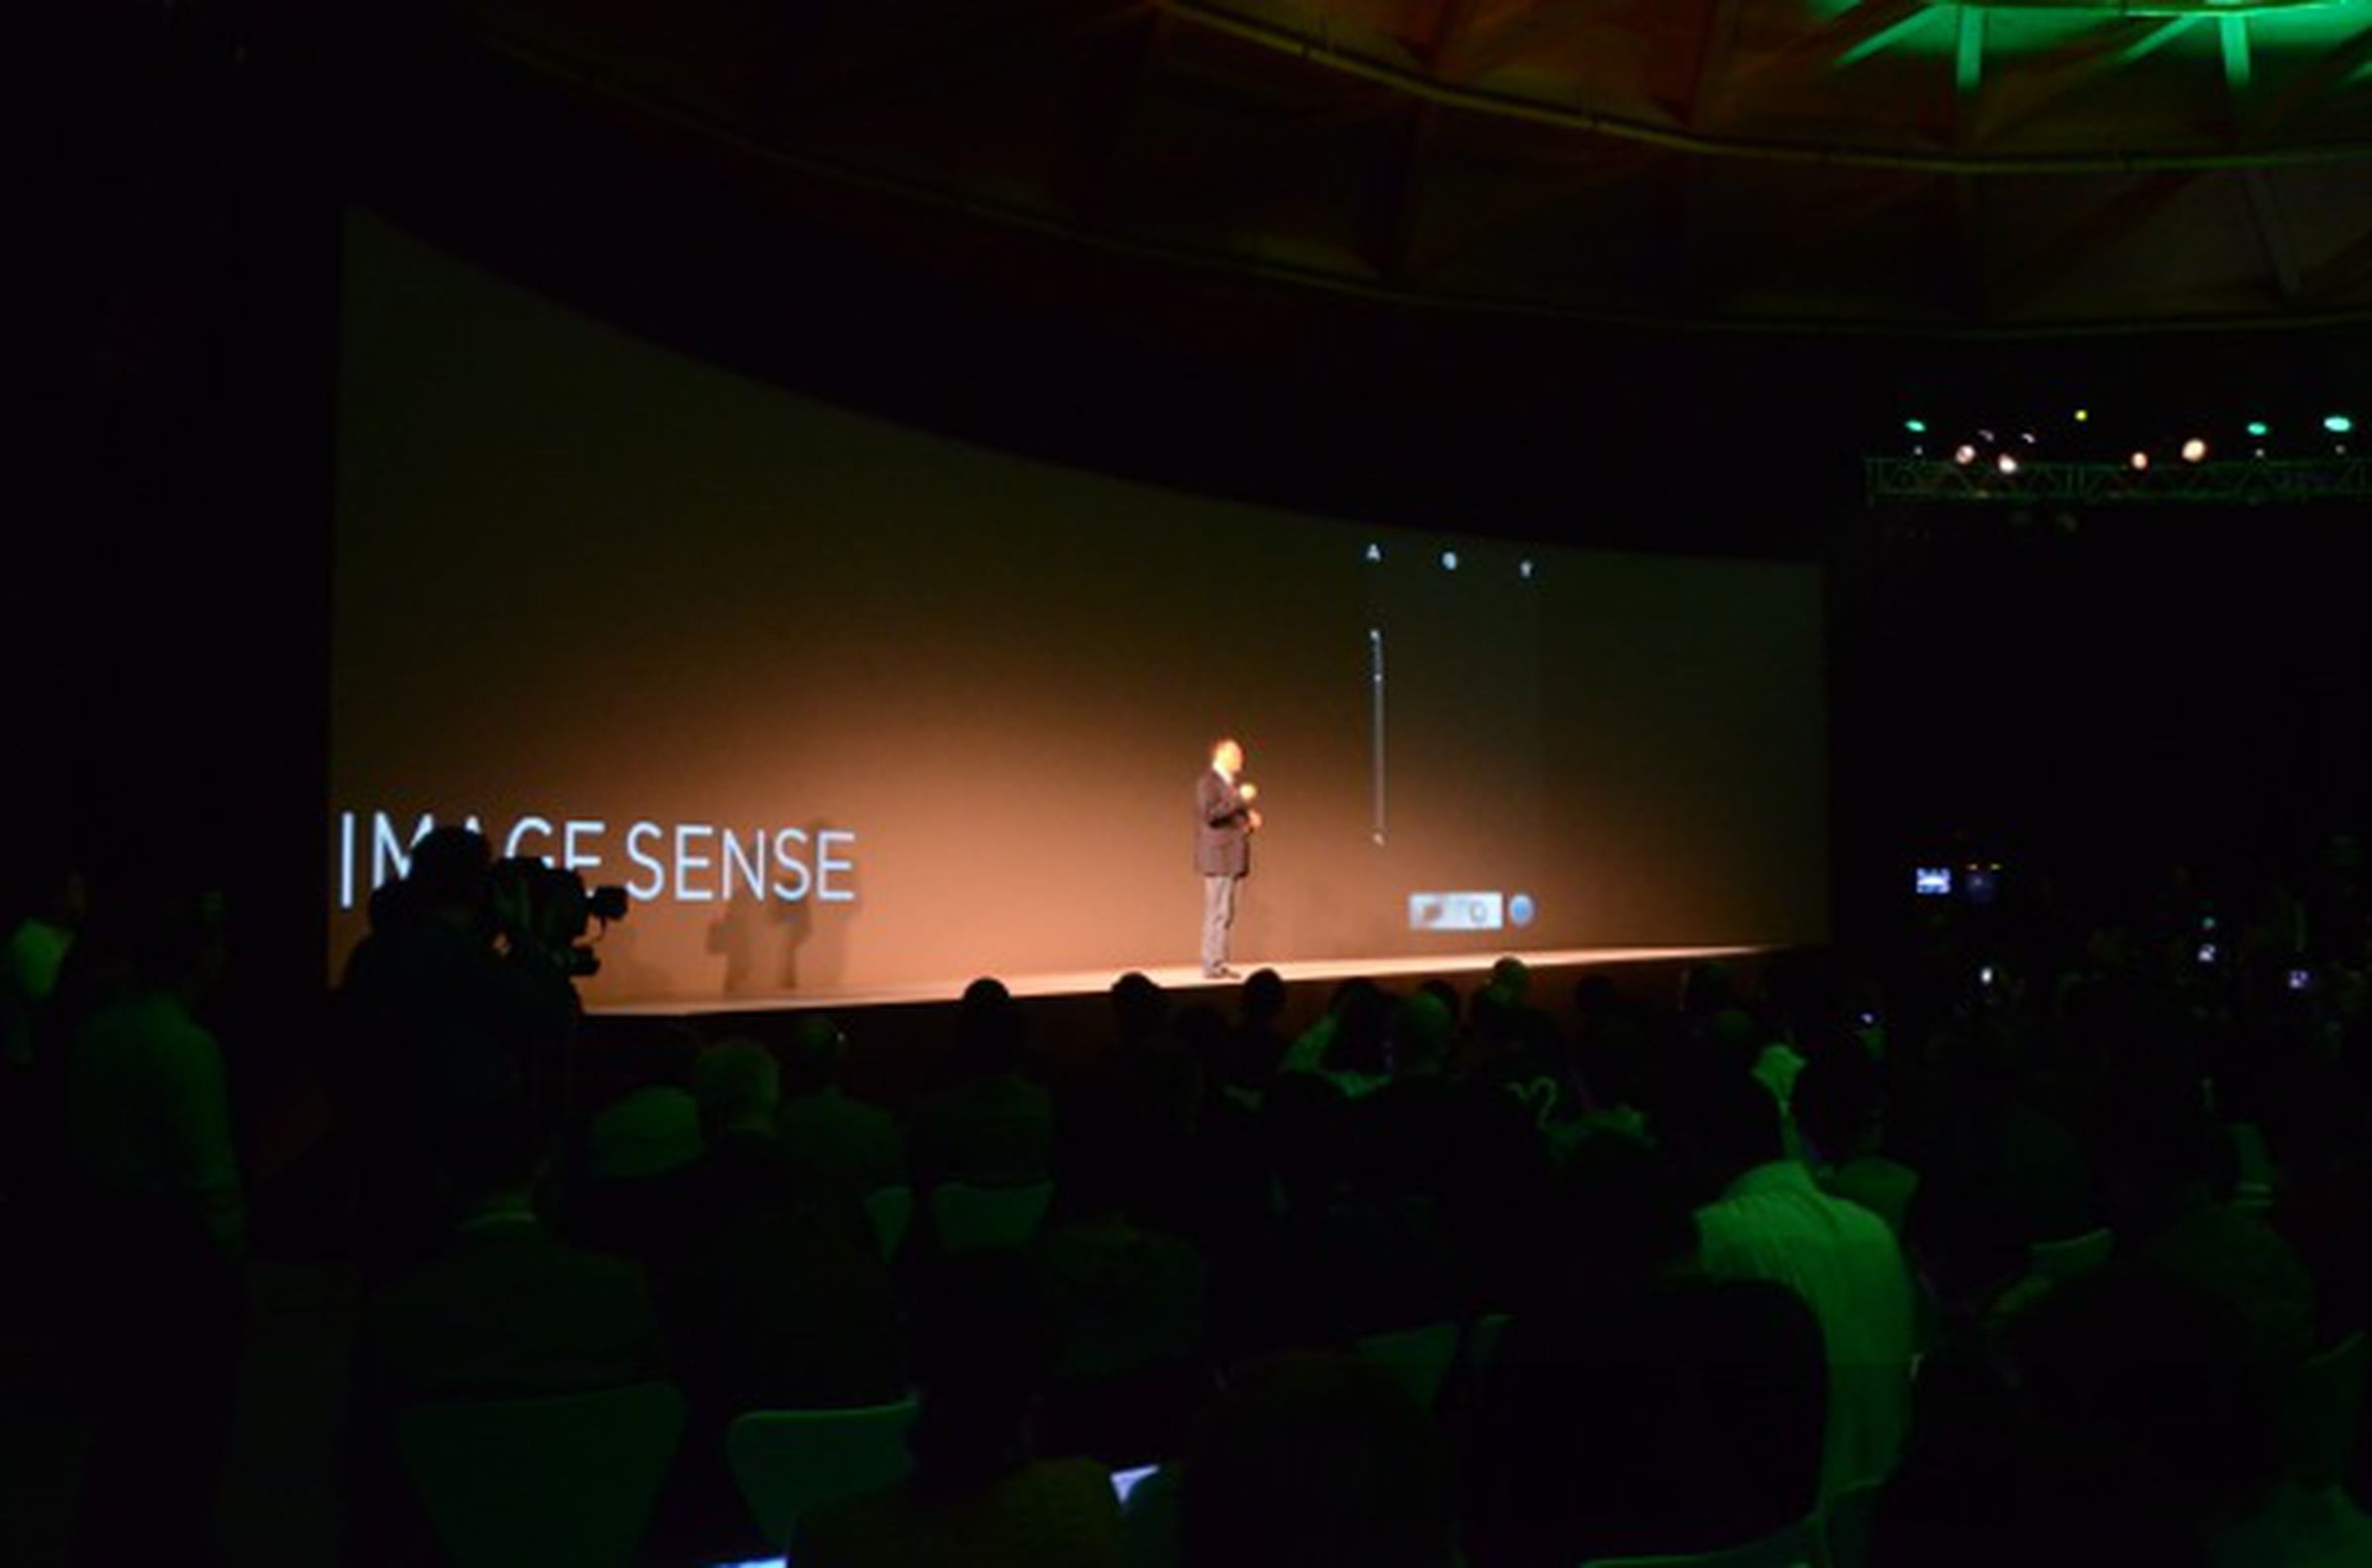 HTC Sense 4 announcement photos